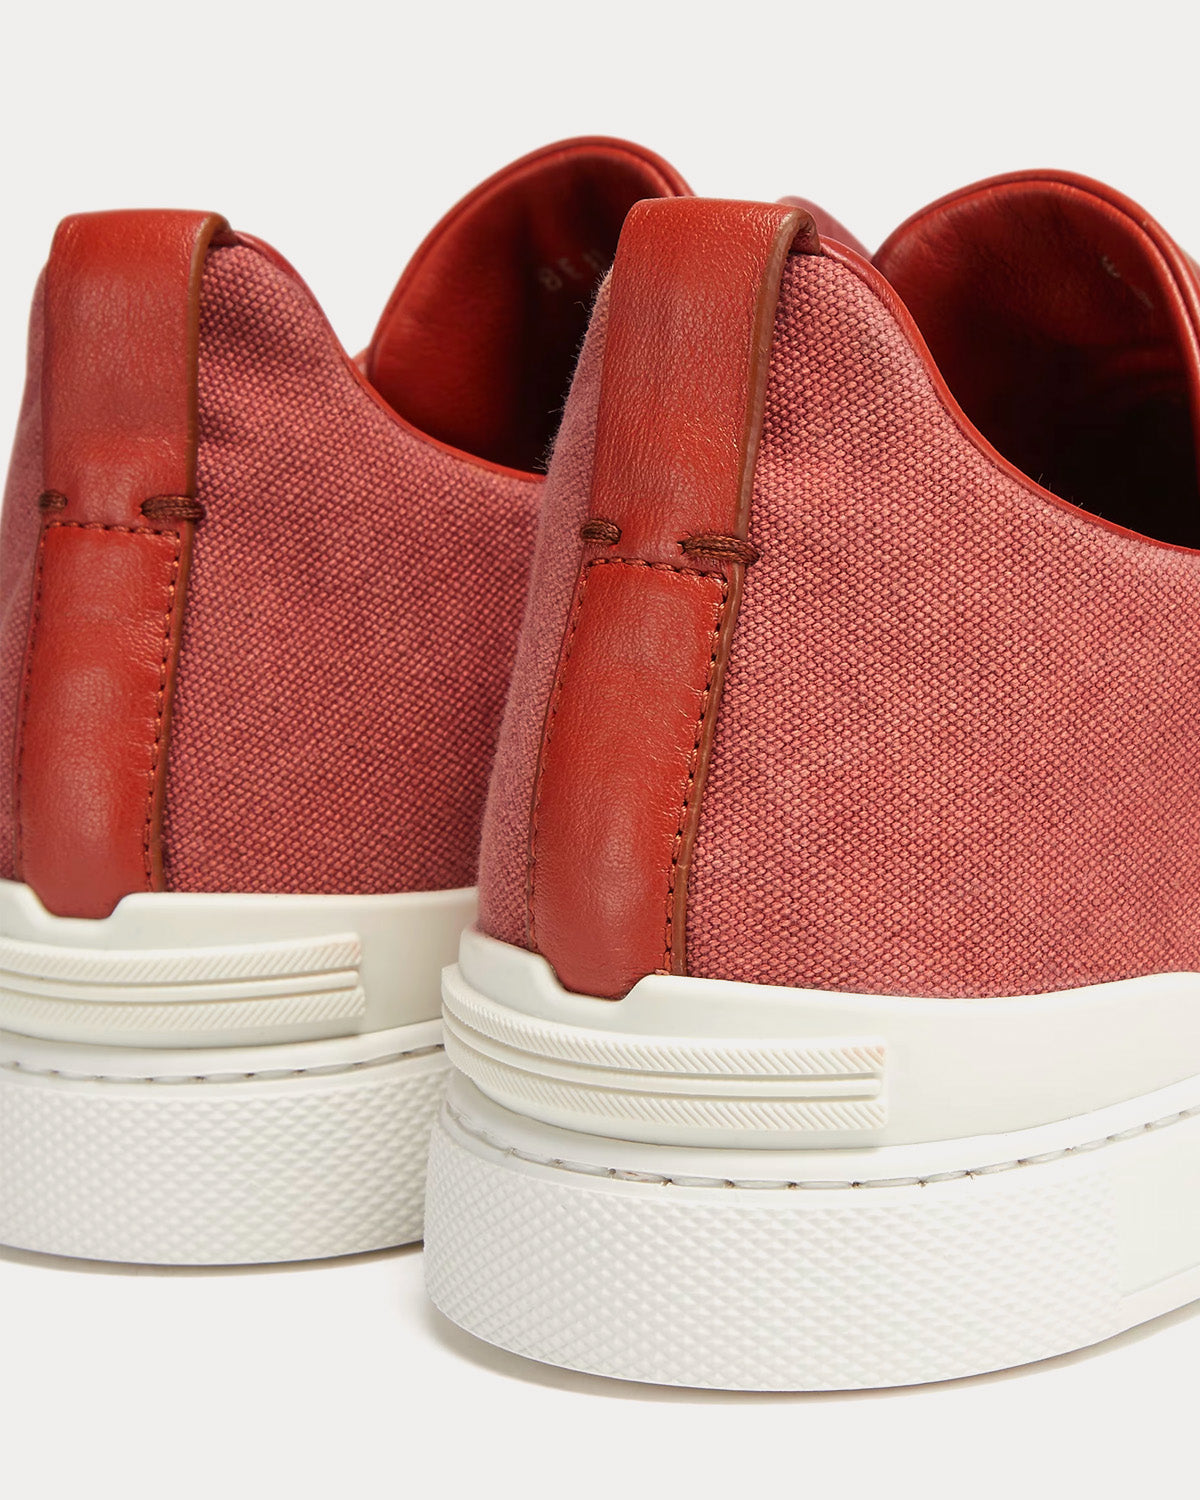 Zegna - Triple Stitch Canvas Dark Red Slip On Sneakers